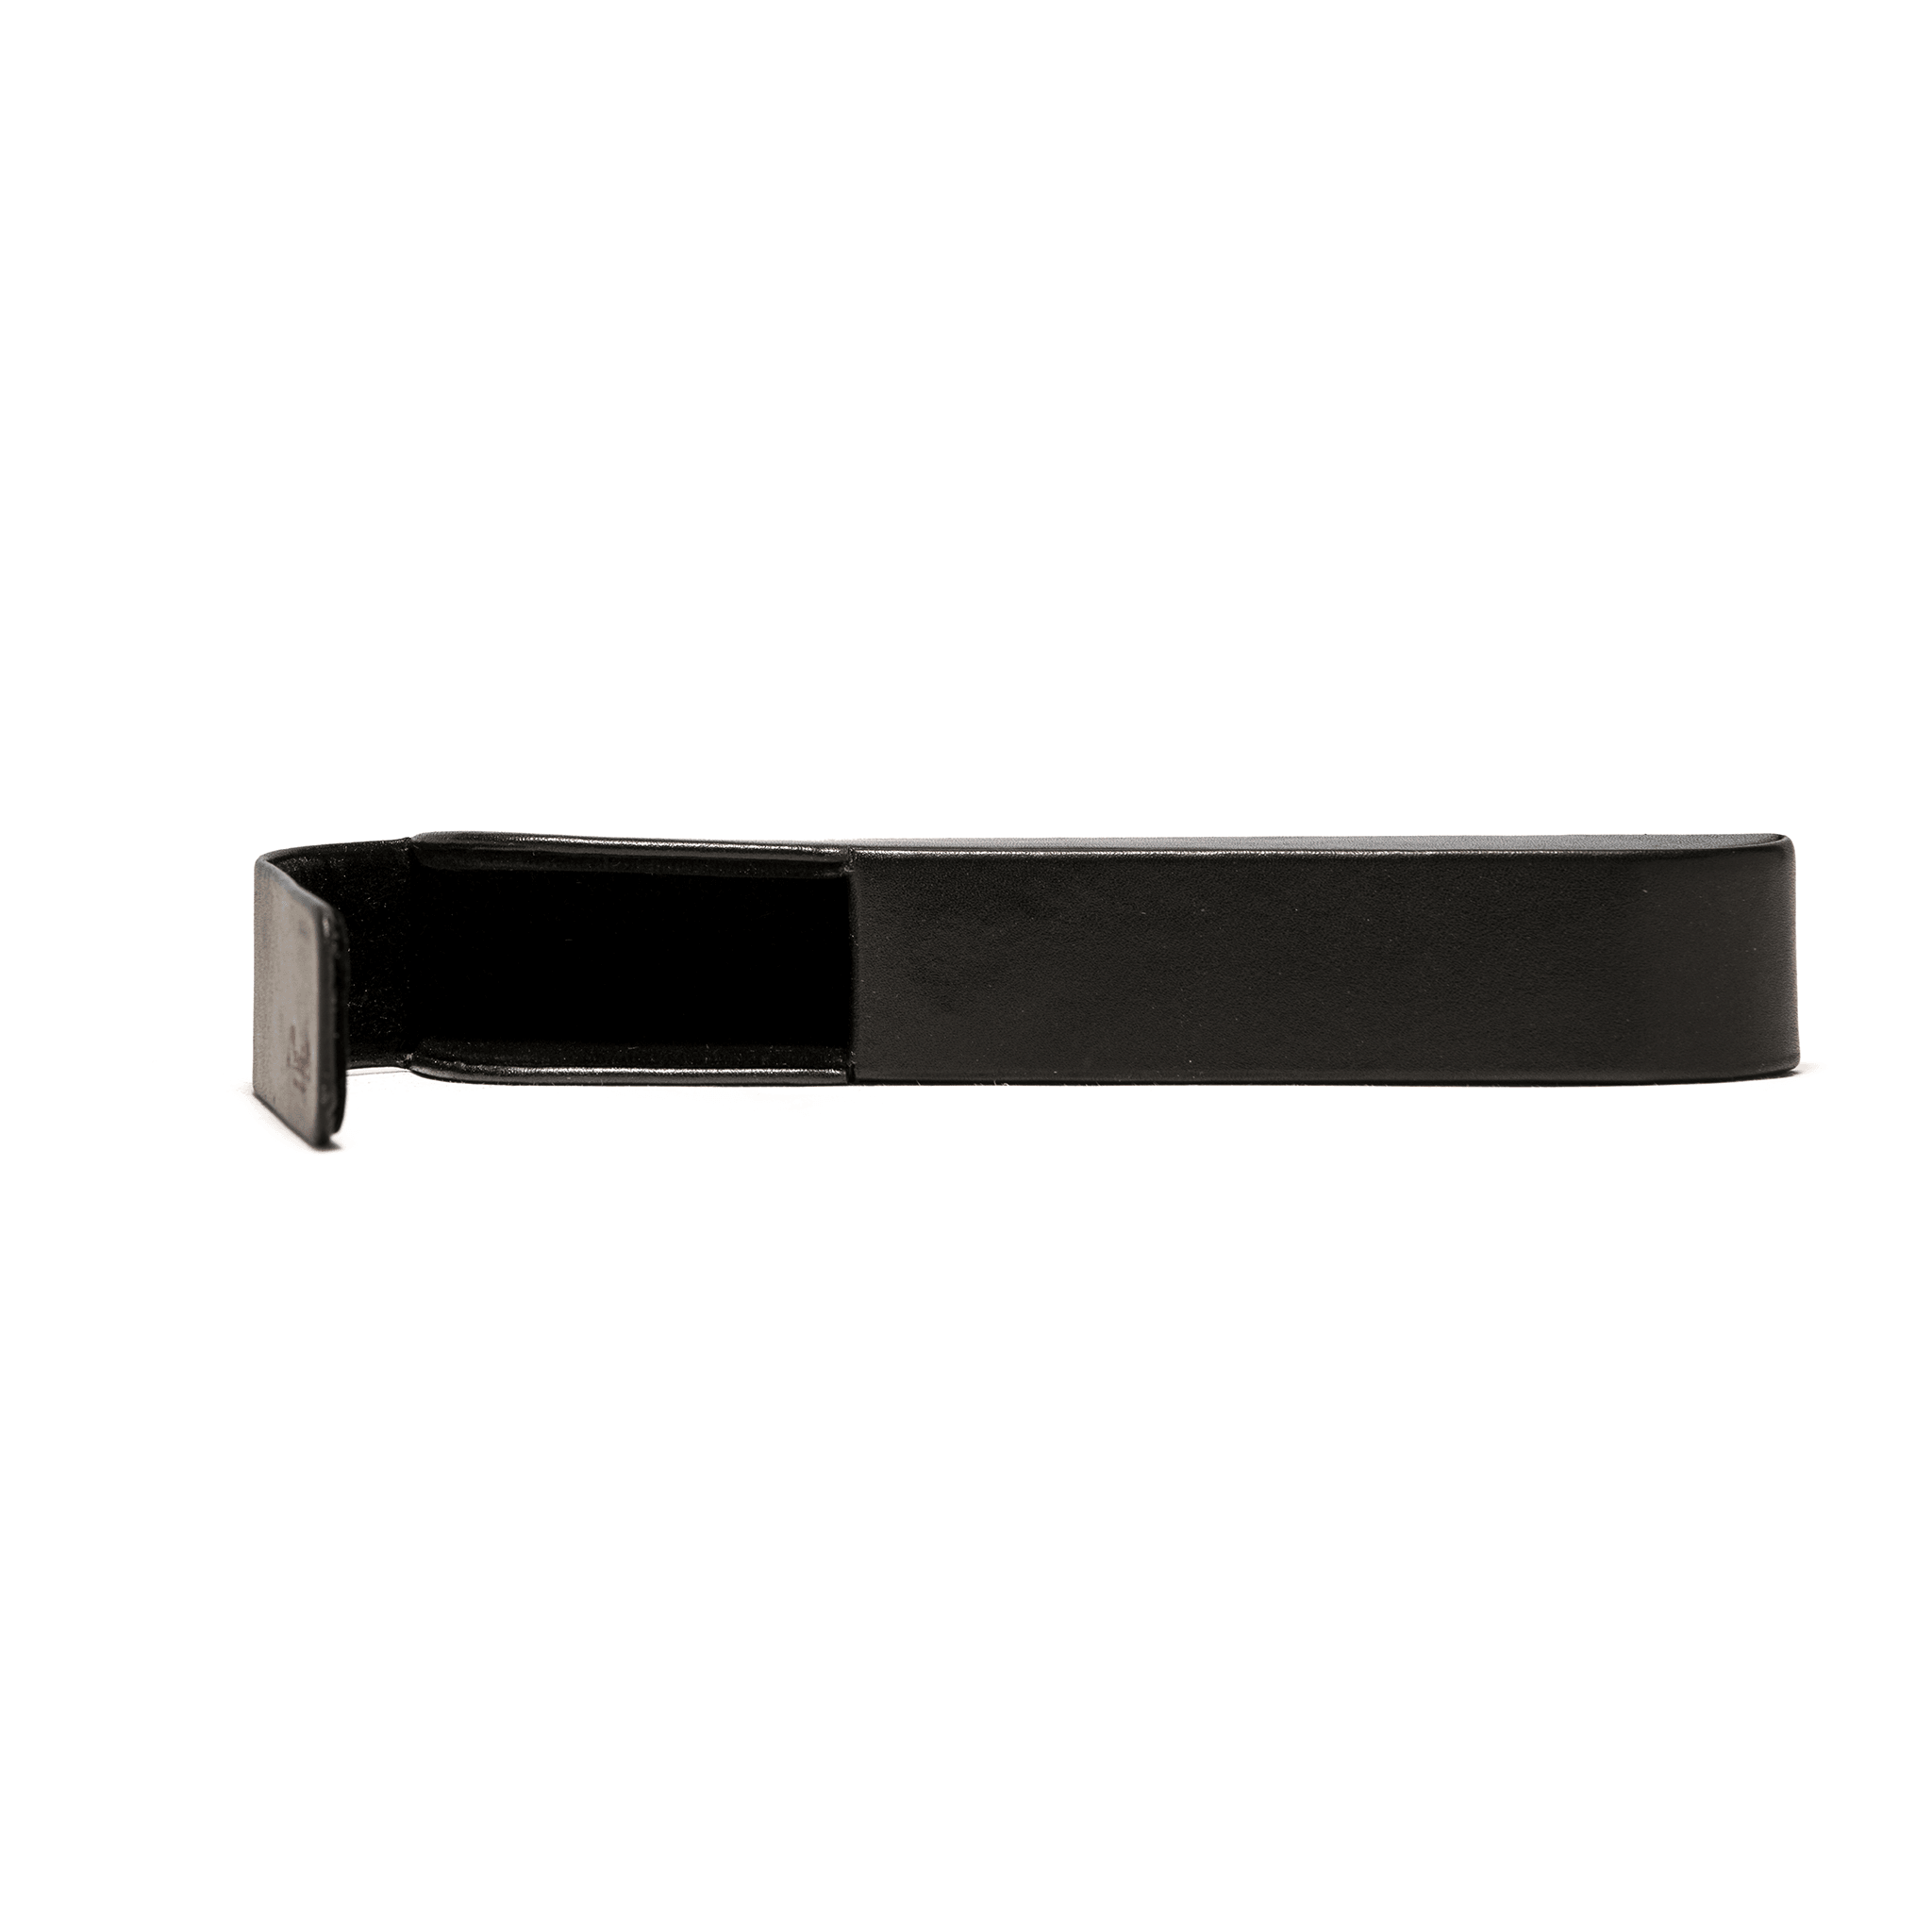 Pineider 1 Pen Leather Case Black - Laywine's